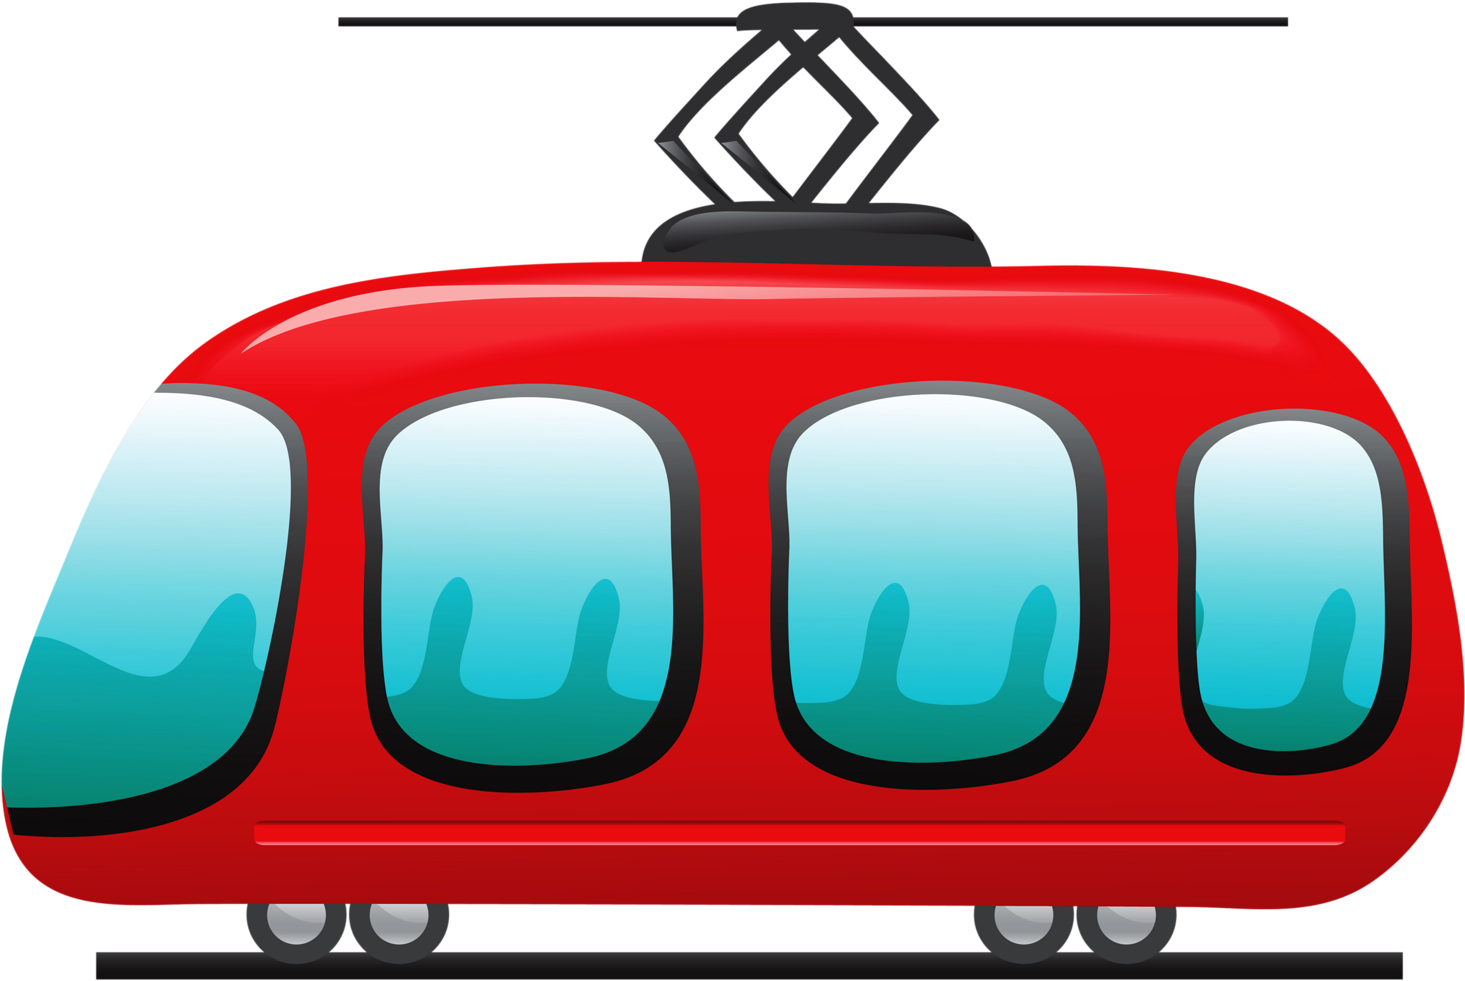 Carro, Ônibus, Metrô E Etc - Clip Art (1600x1104)